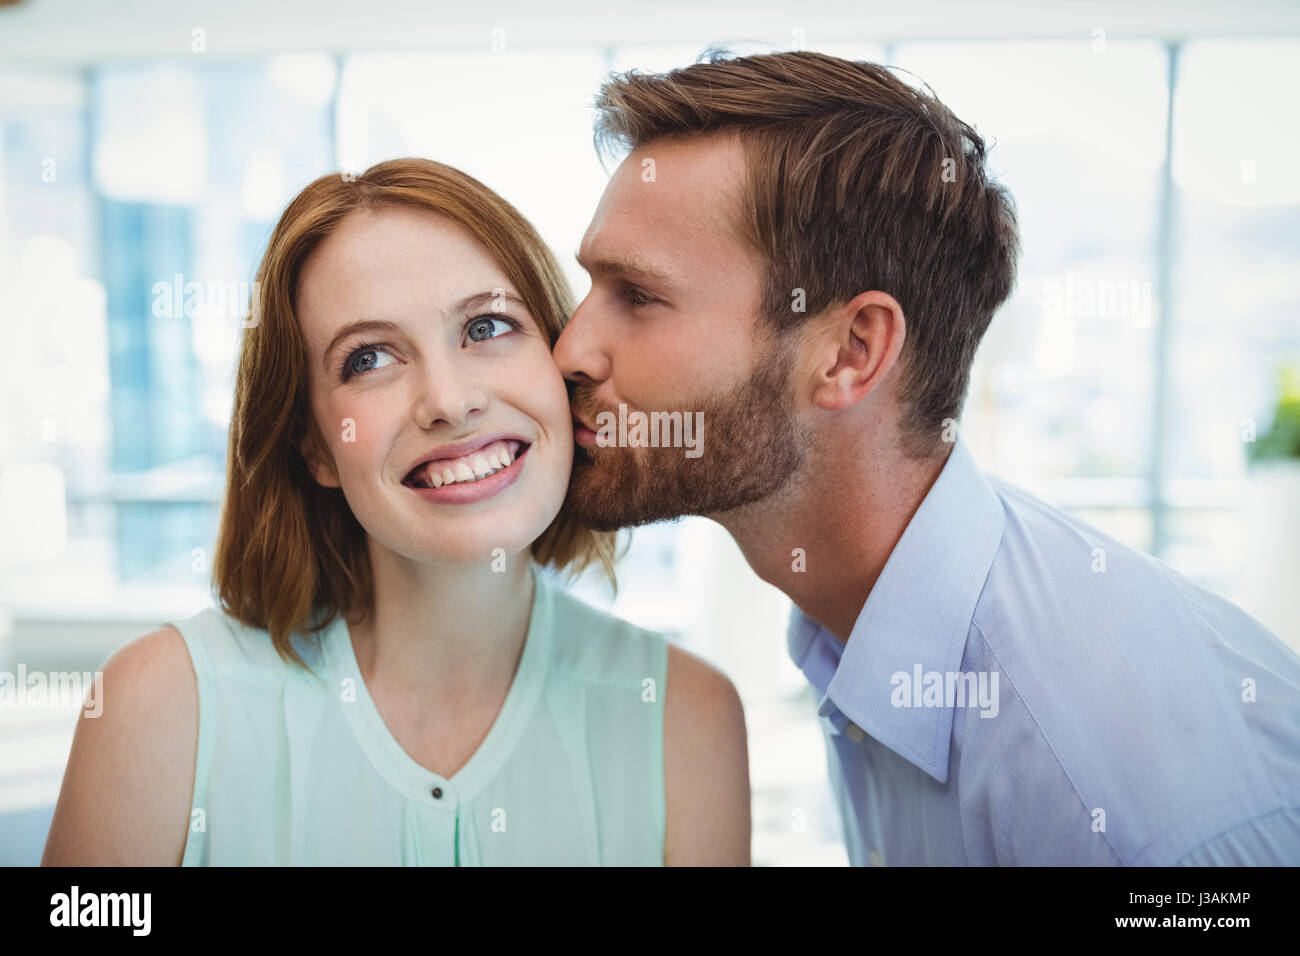 https://c8.alamy.com/comp/J3AKMP/affectionate-man-kissing-woman-in-office-J3AKMP.jpg